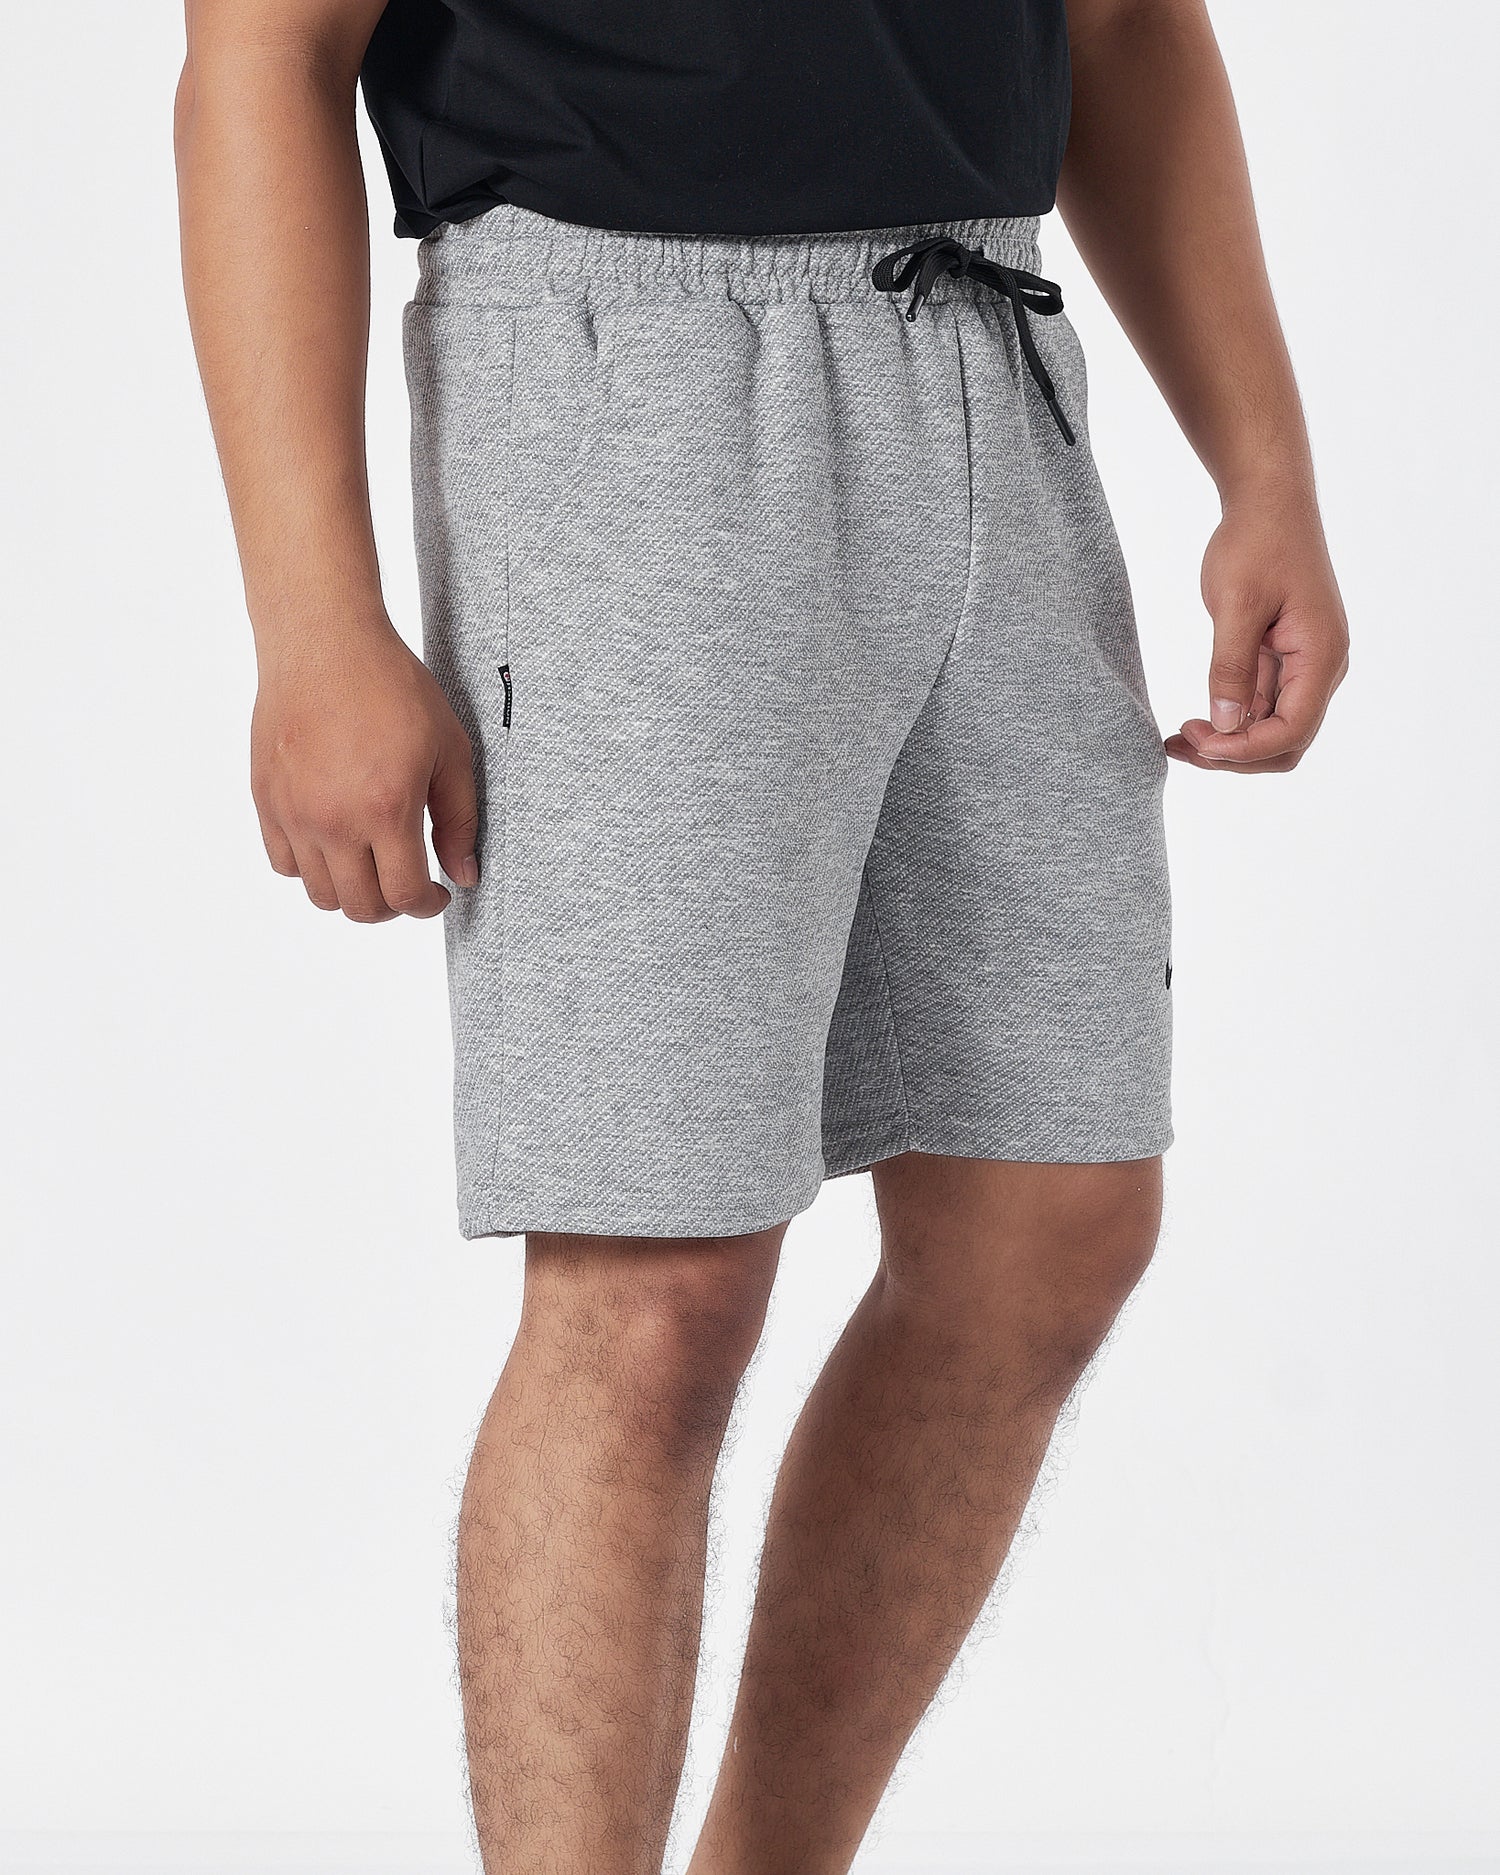 NIK Swooh Logo Printed Men Grey Track Shorts 13.90